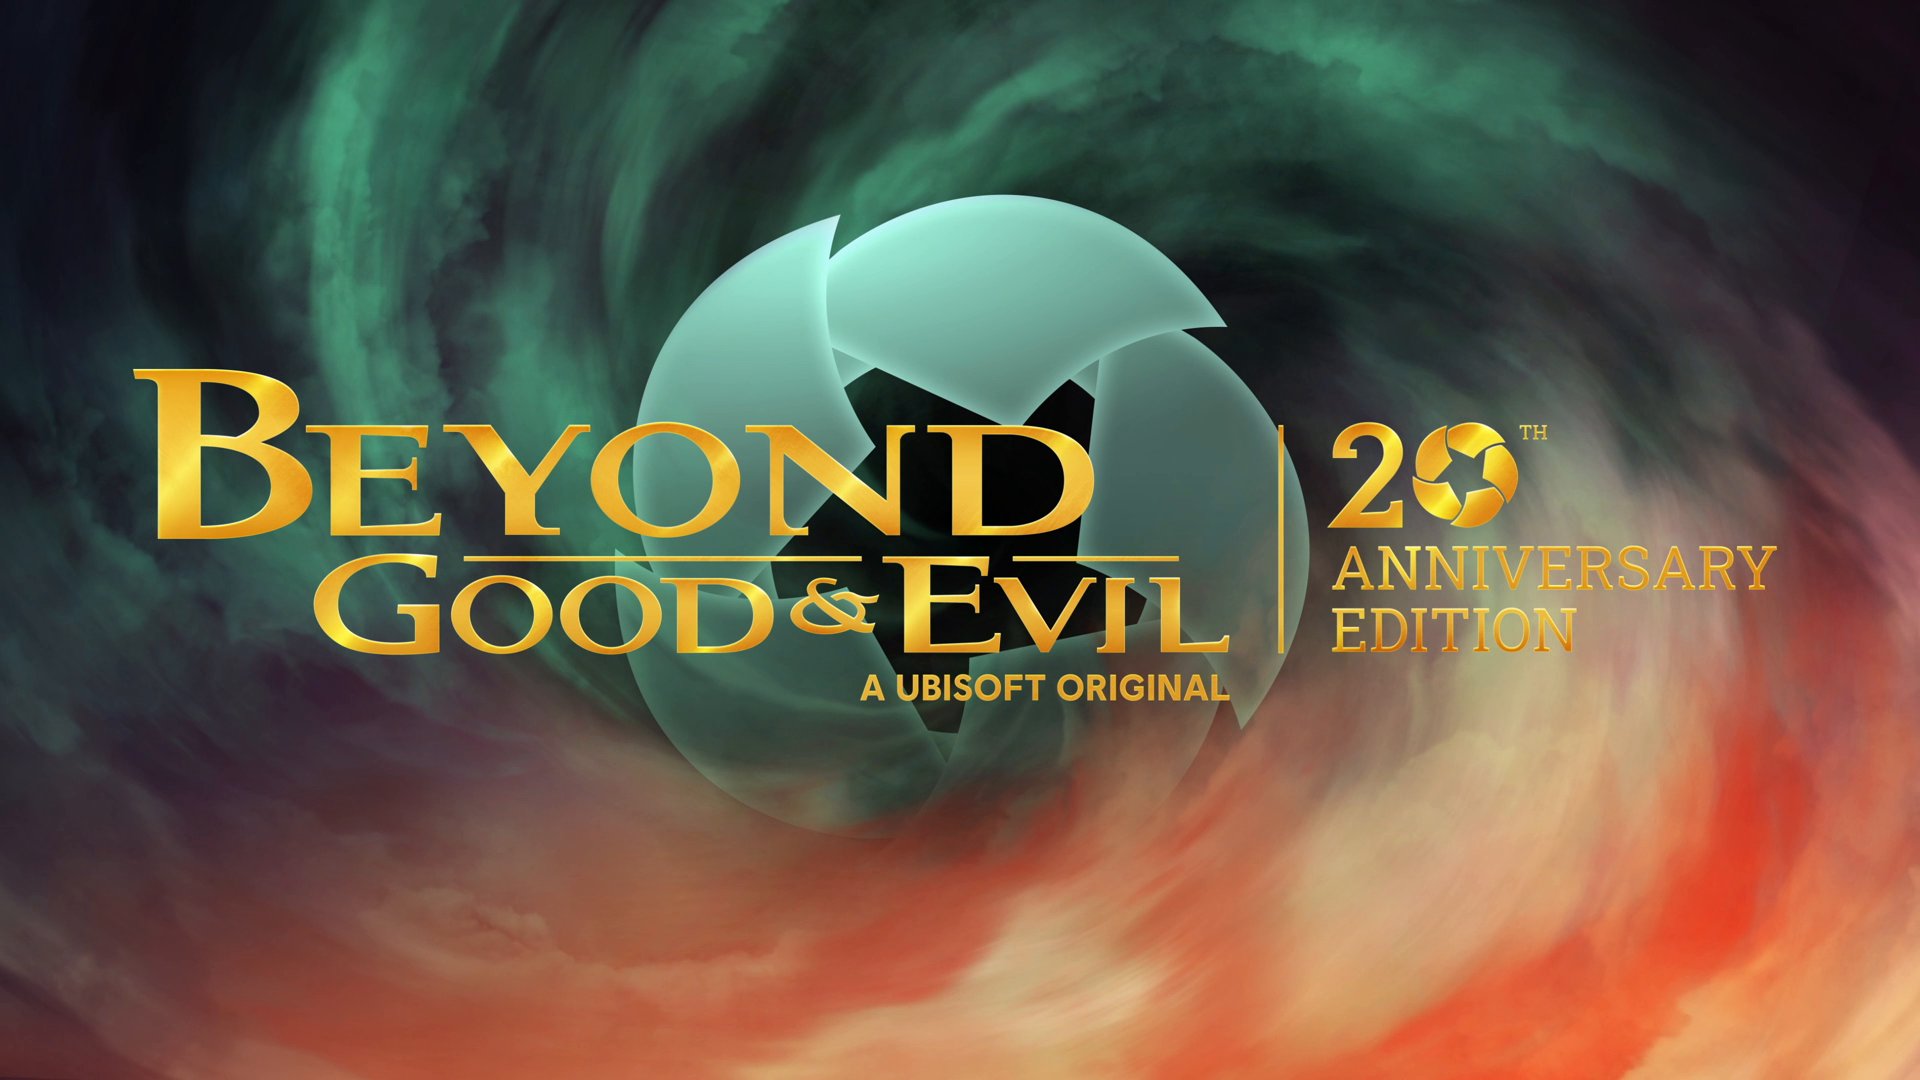 Beyond Good & Evil 20th Anniversary Edition sortira le 25 juin sur PS5, Xbox Series, PS4, Xbox One, Switch et PC